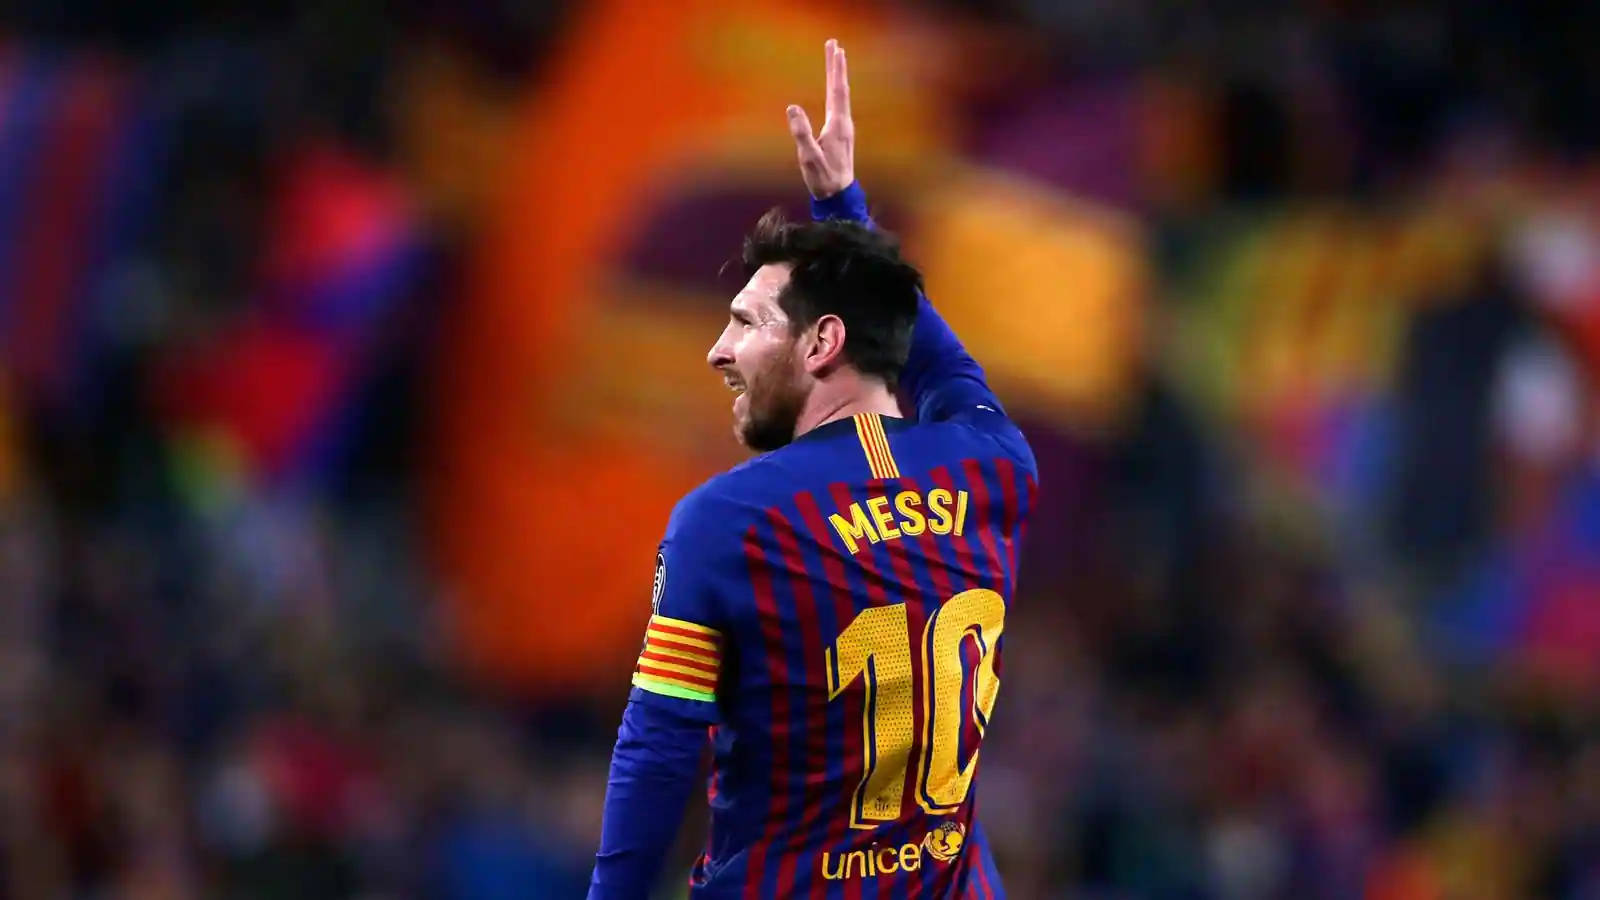 Messi2021 Mano Arriba Fondo de pantalla